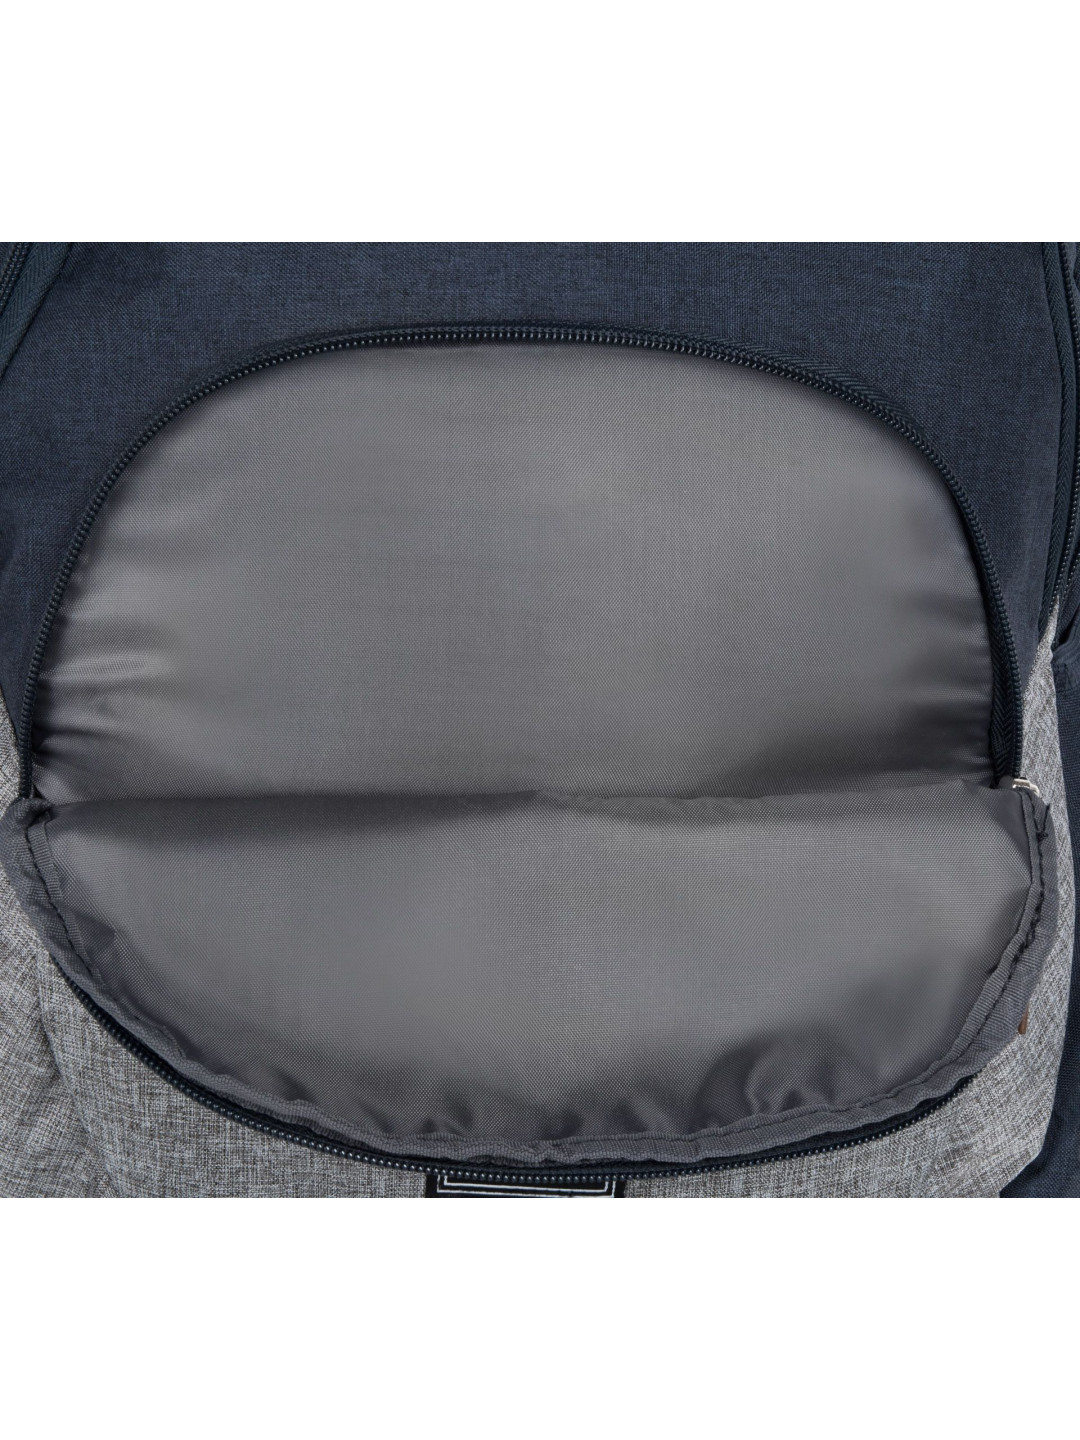 Travelite Basics Backpack Melange Navy grey